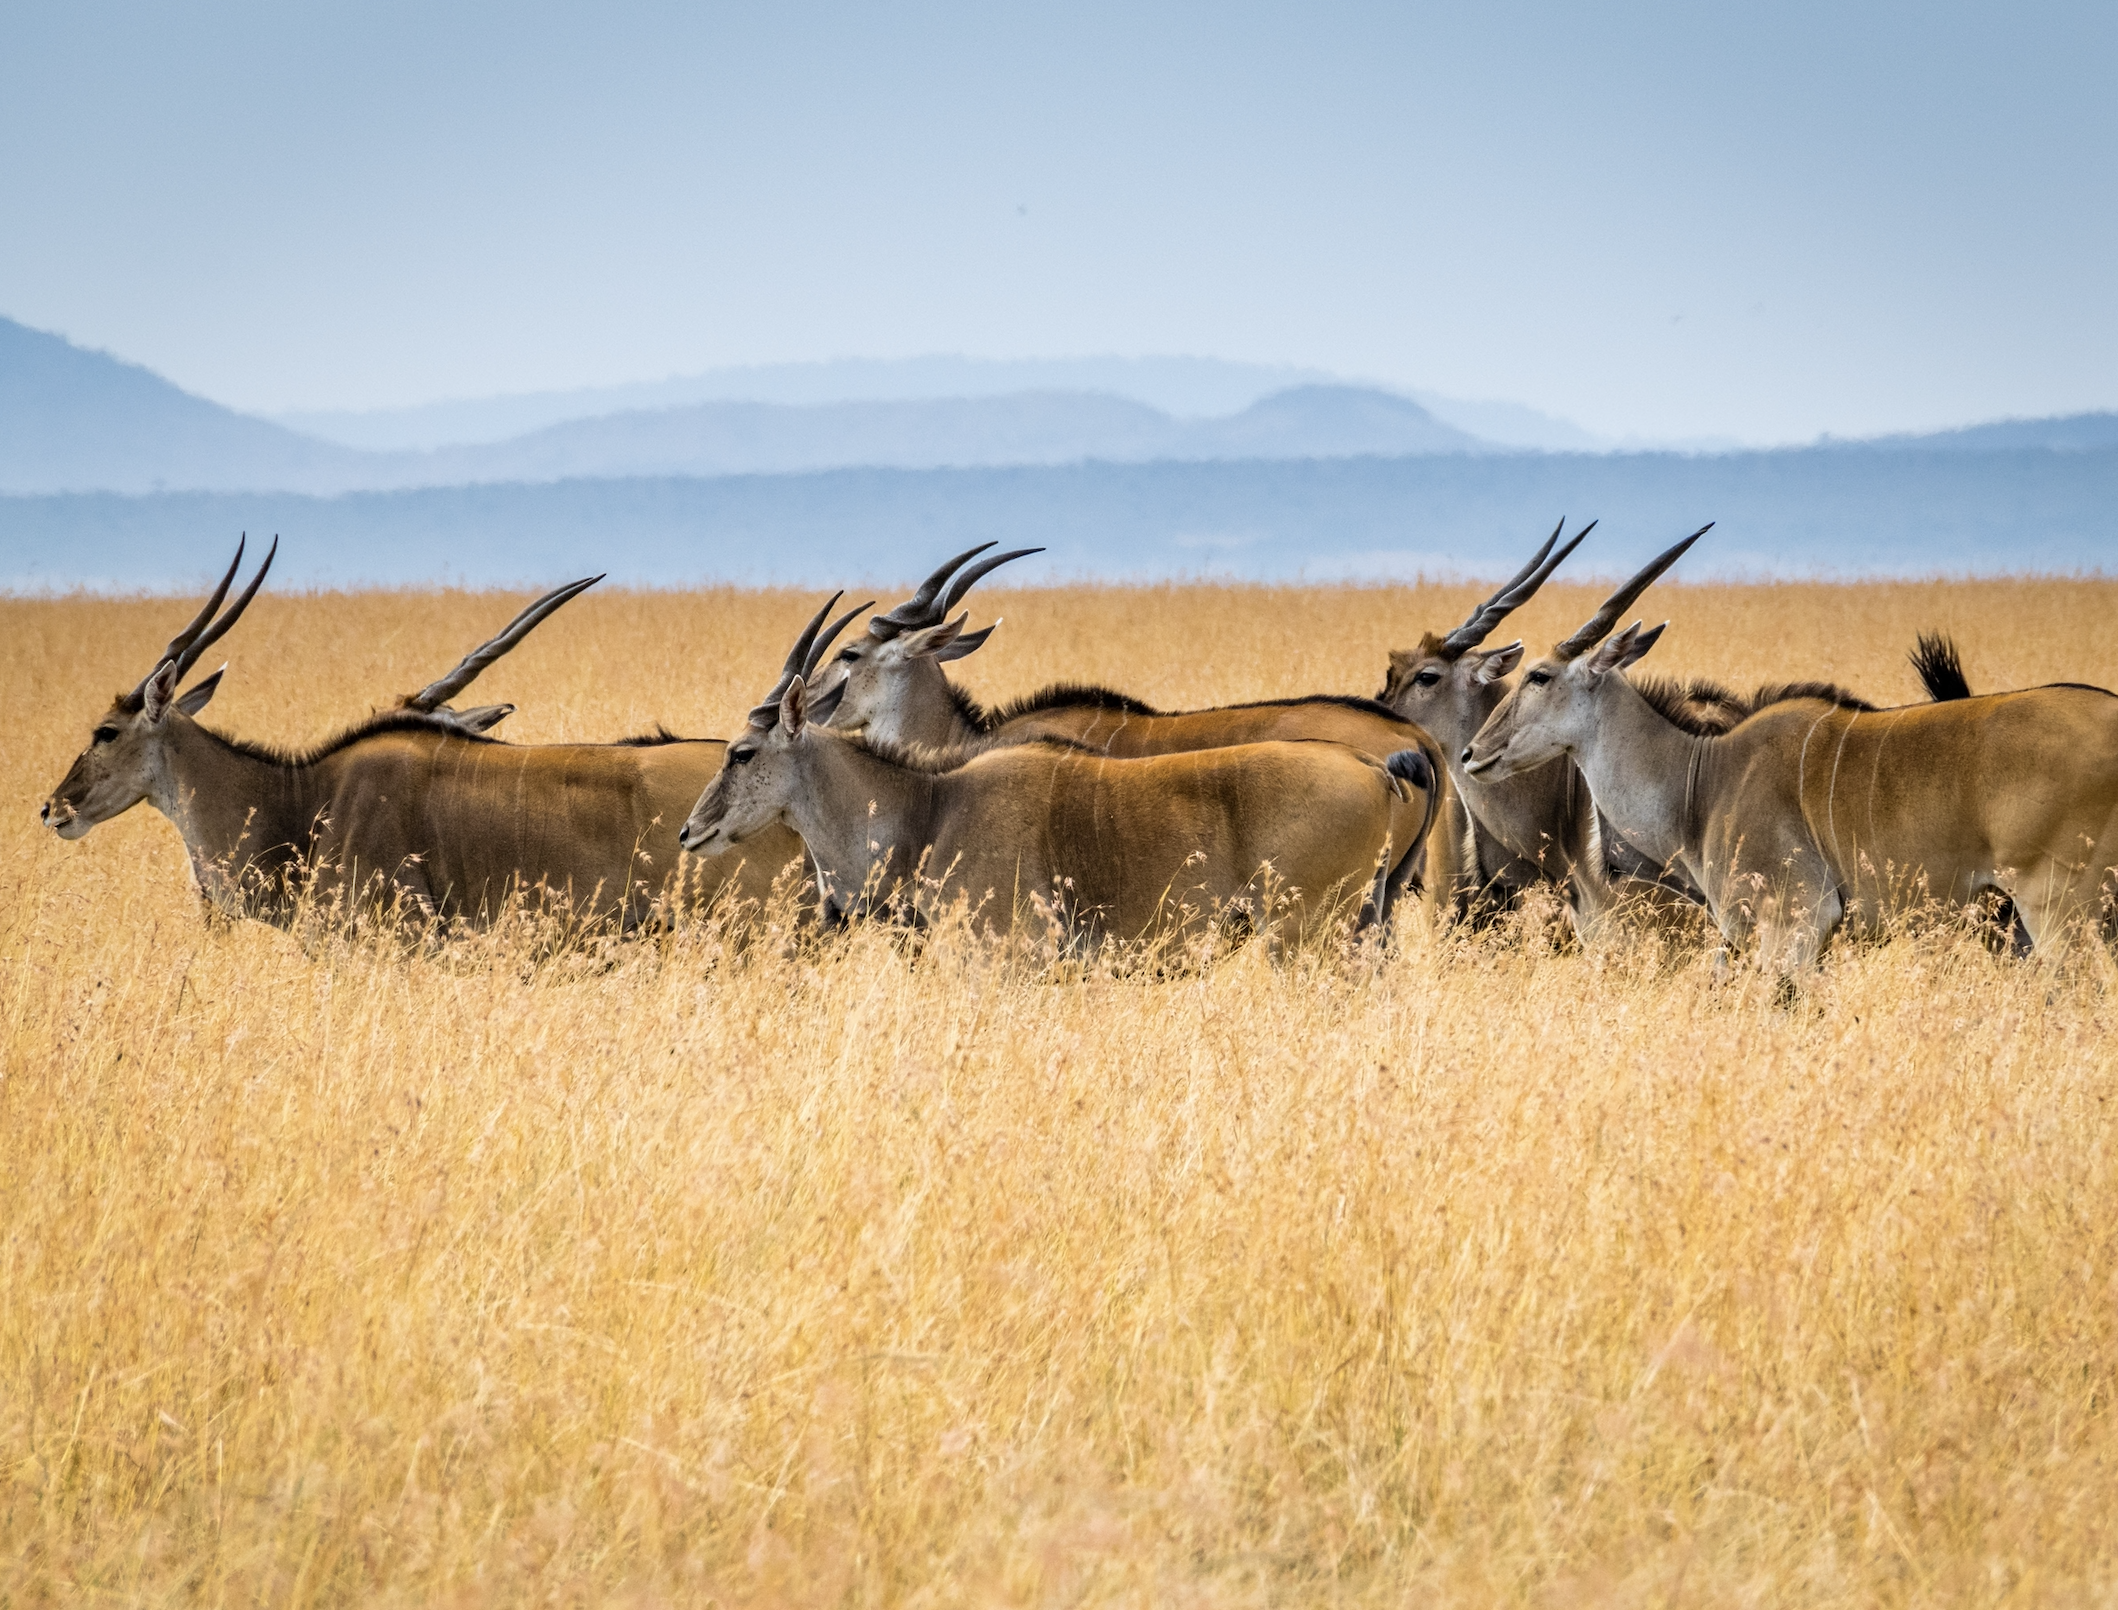 Antelope in the wild